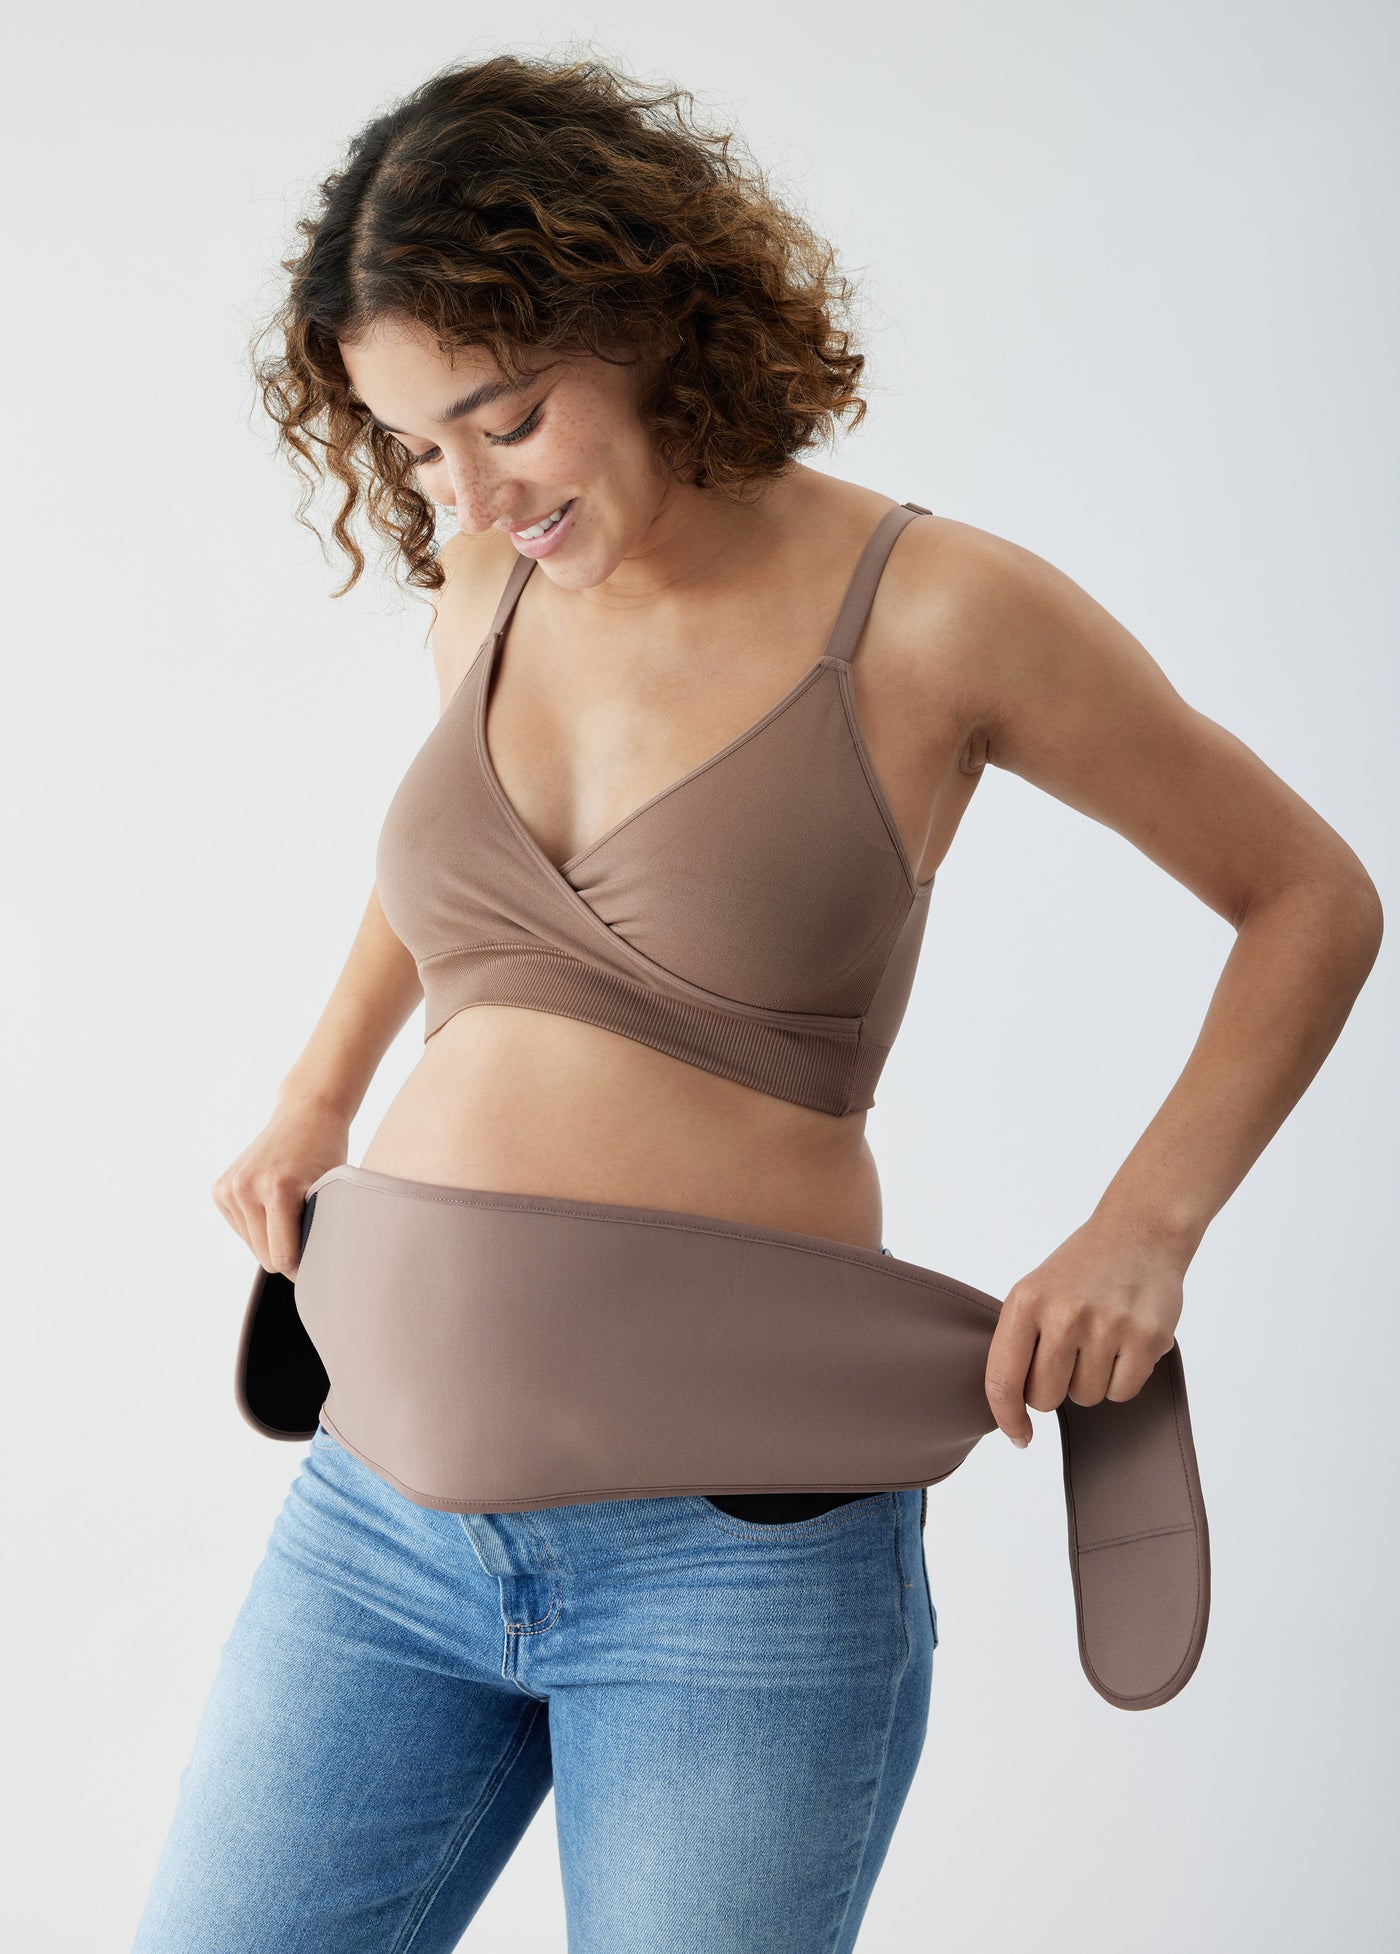 The Support Belt - Pregnancy Belly Band by Ingrid+Isabel